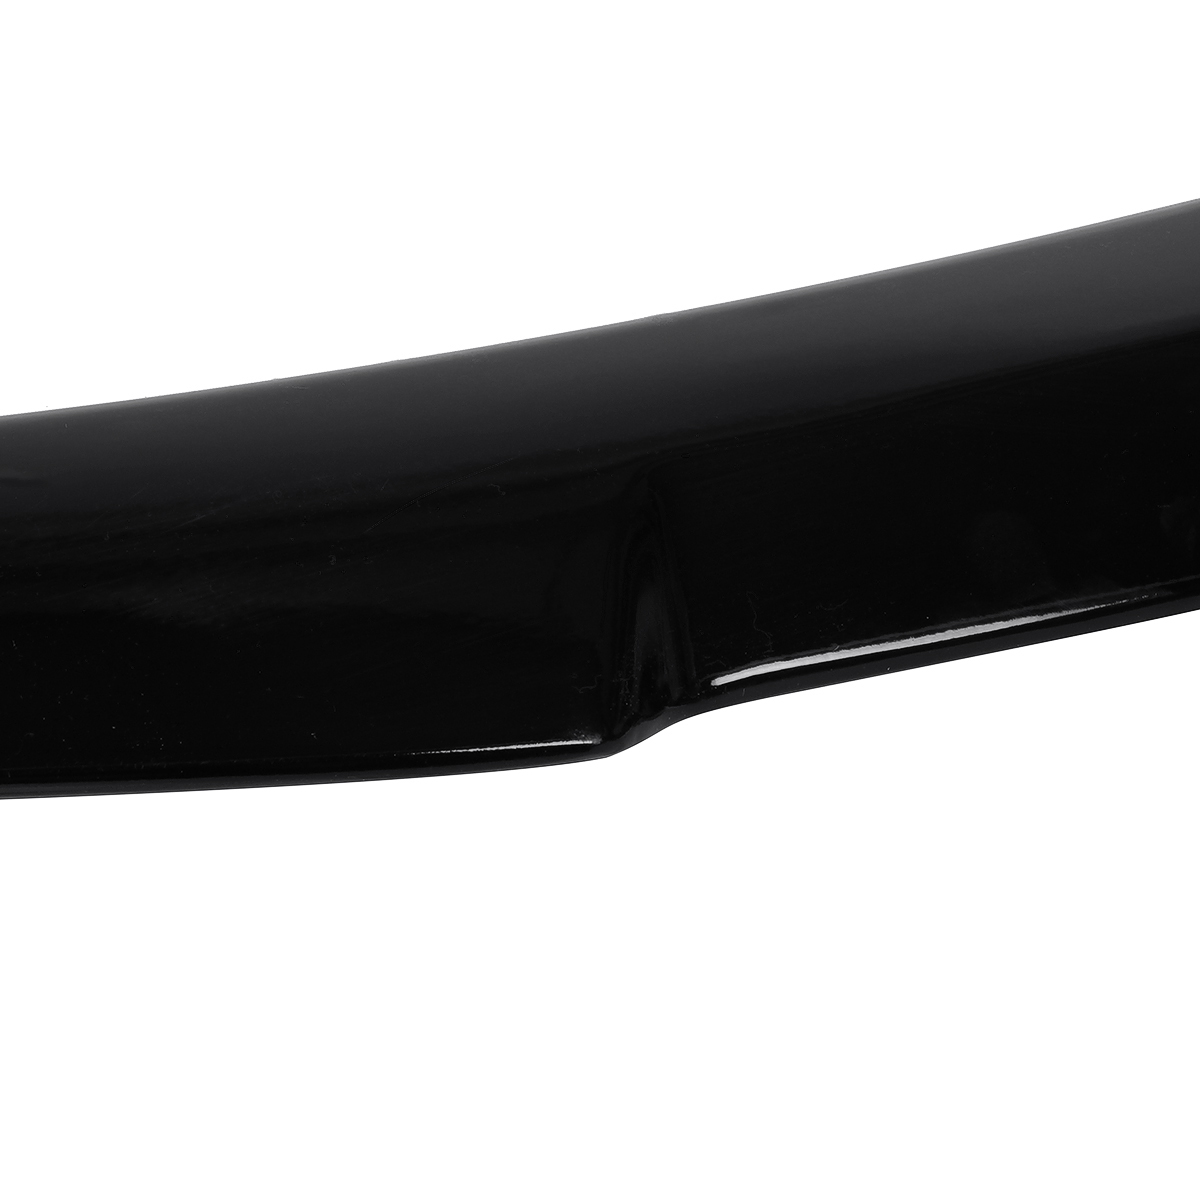 Glossy Black/Carbon Fiber Color ABS Car Rear Trunk Spoiler Wing Lip for Infiniti Q50 2014-2020